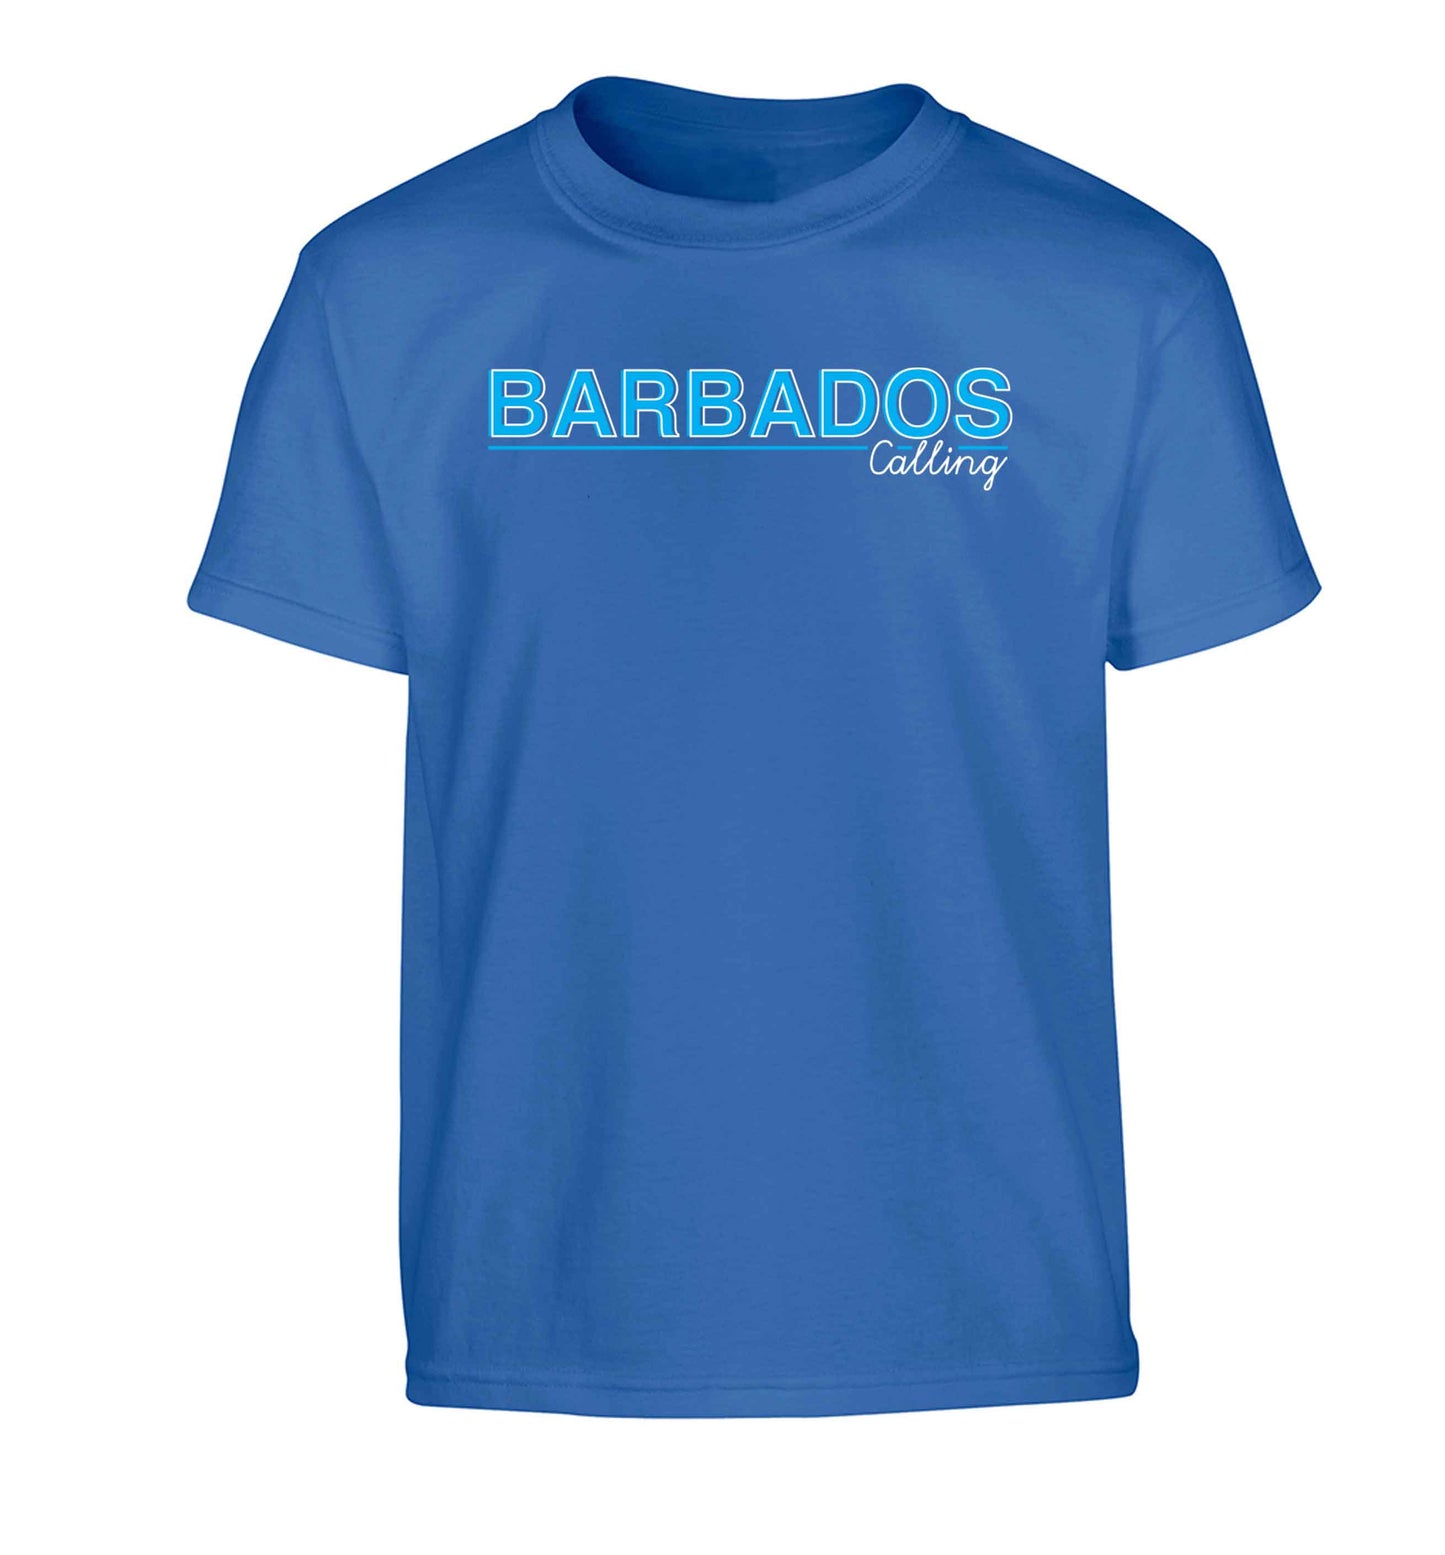 Barbados calling Children's blue Tshirt 12-13 Years